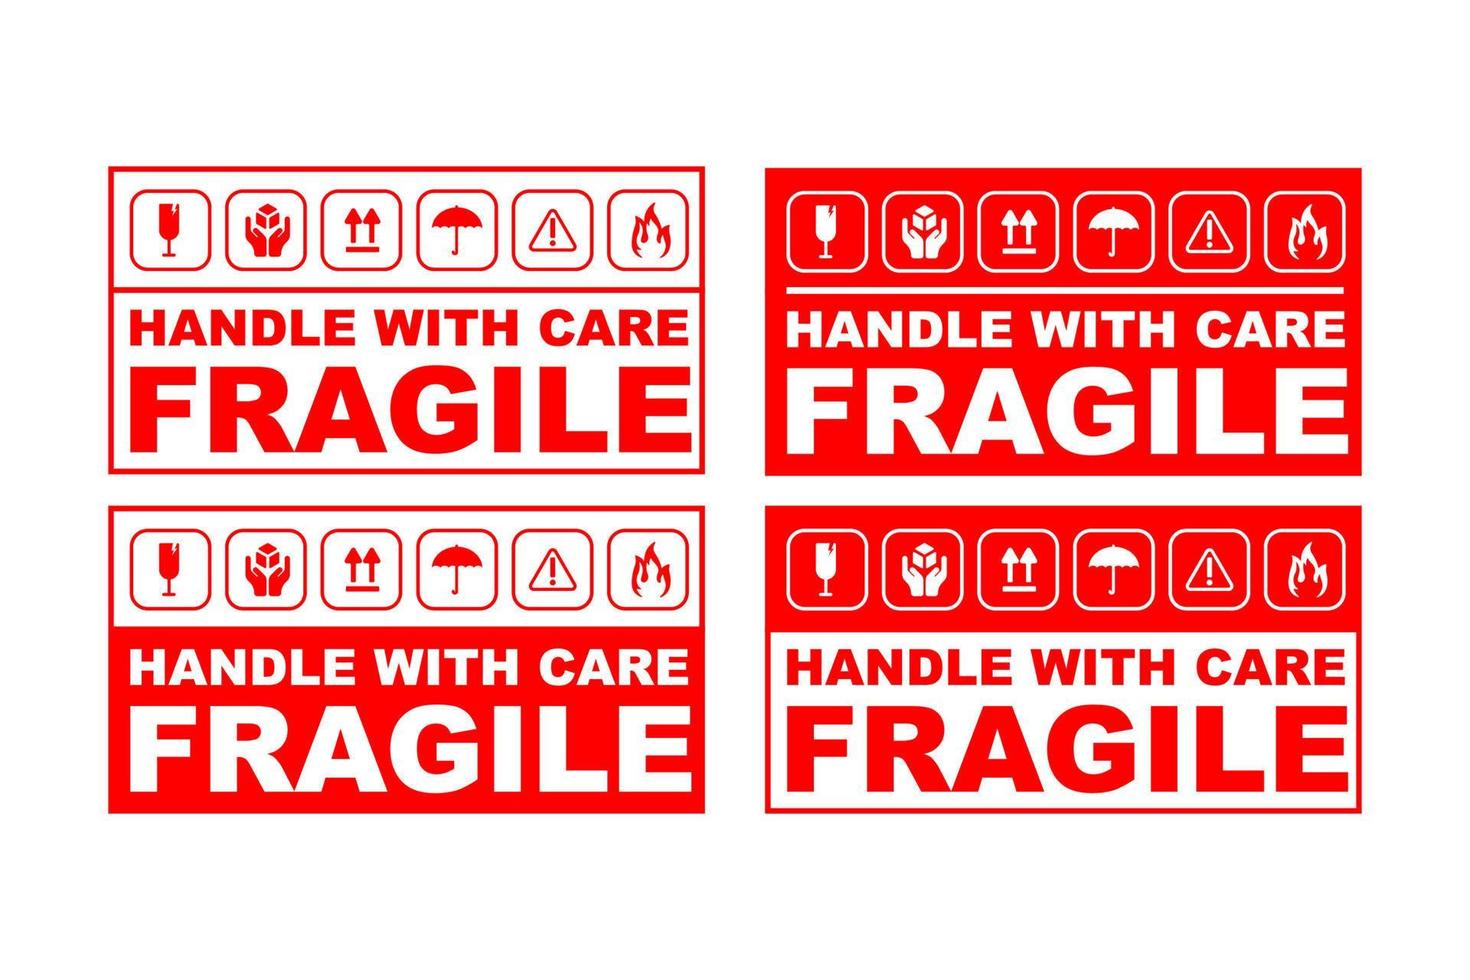 Fragile sticker vector design